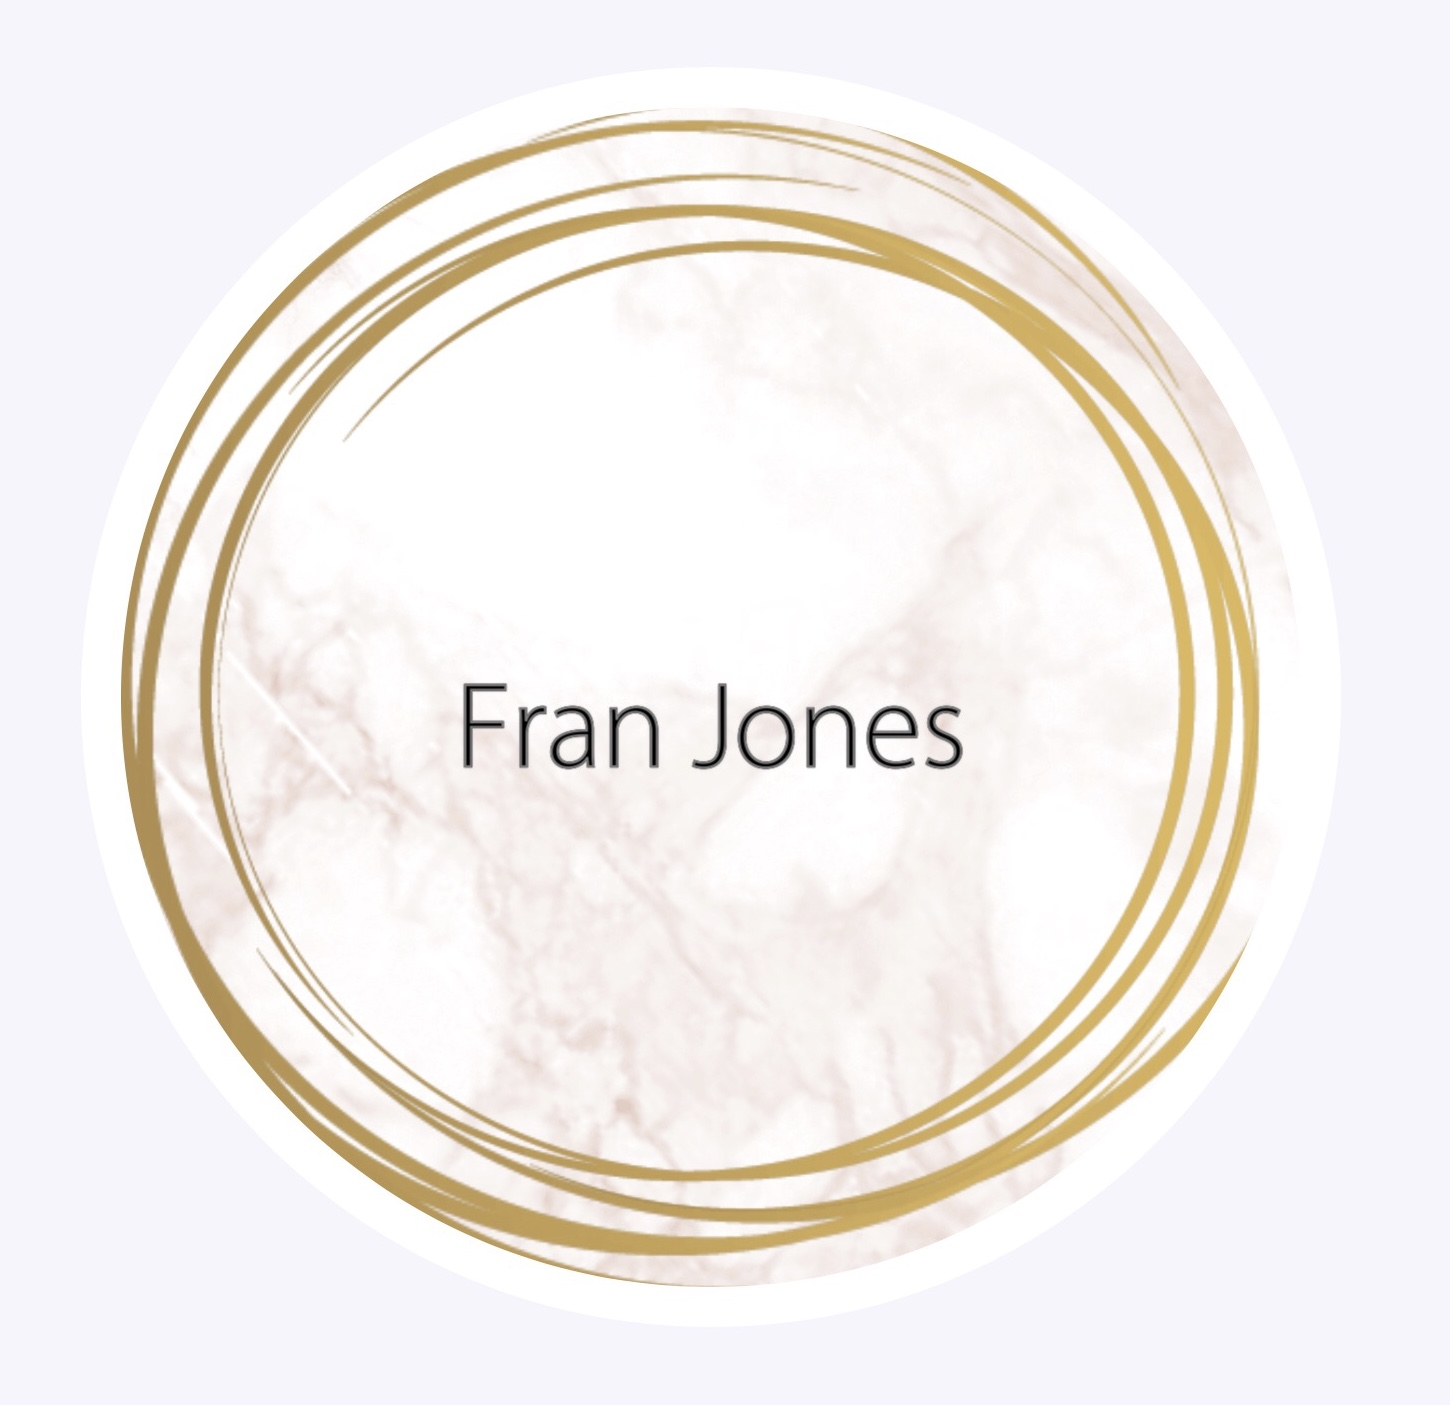 Fran Jones